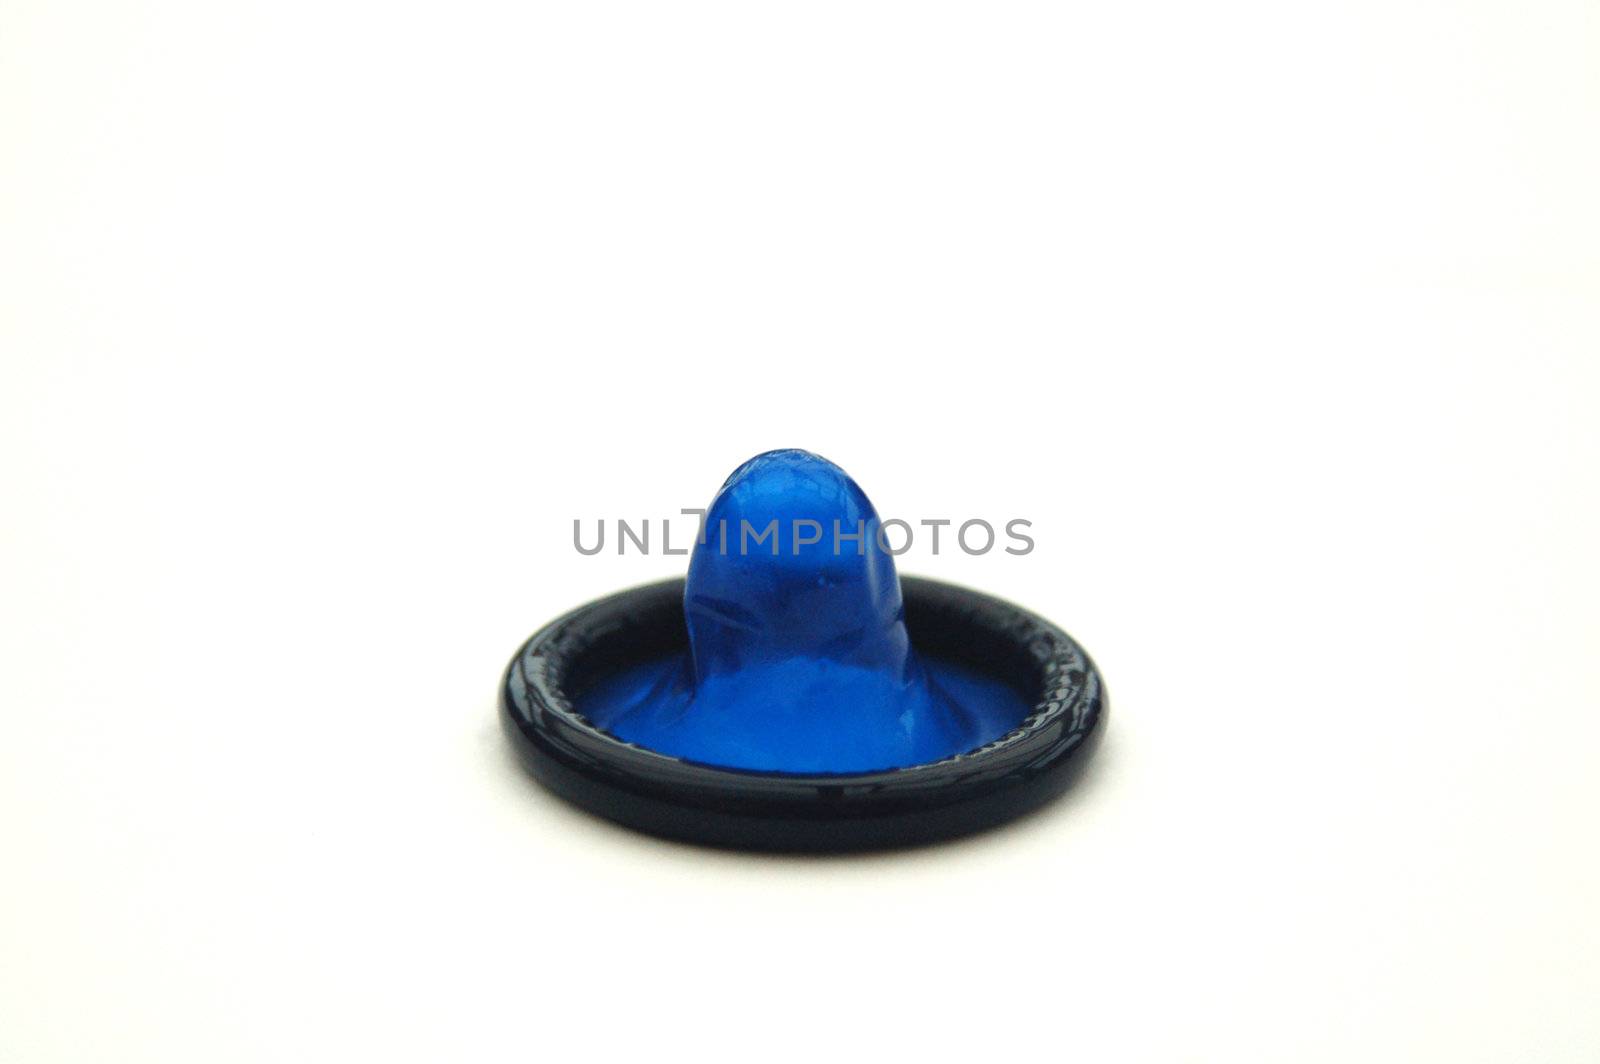 Bright Blue Condom on White Background